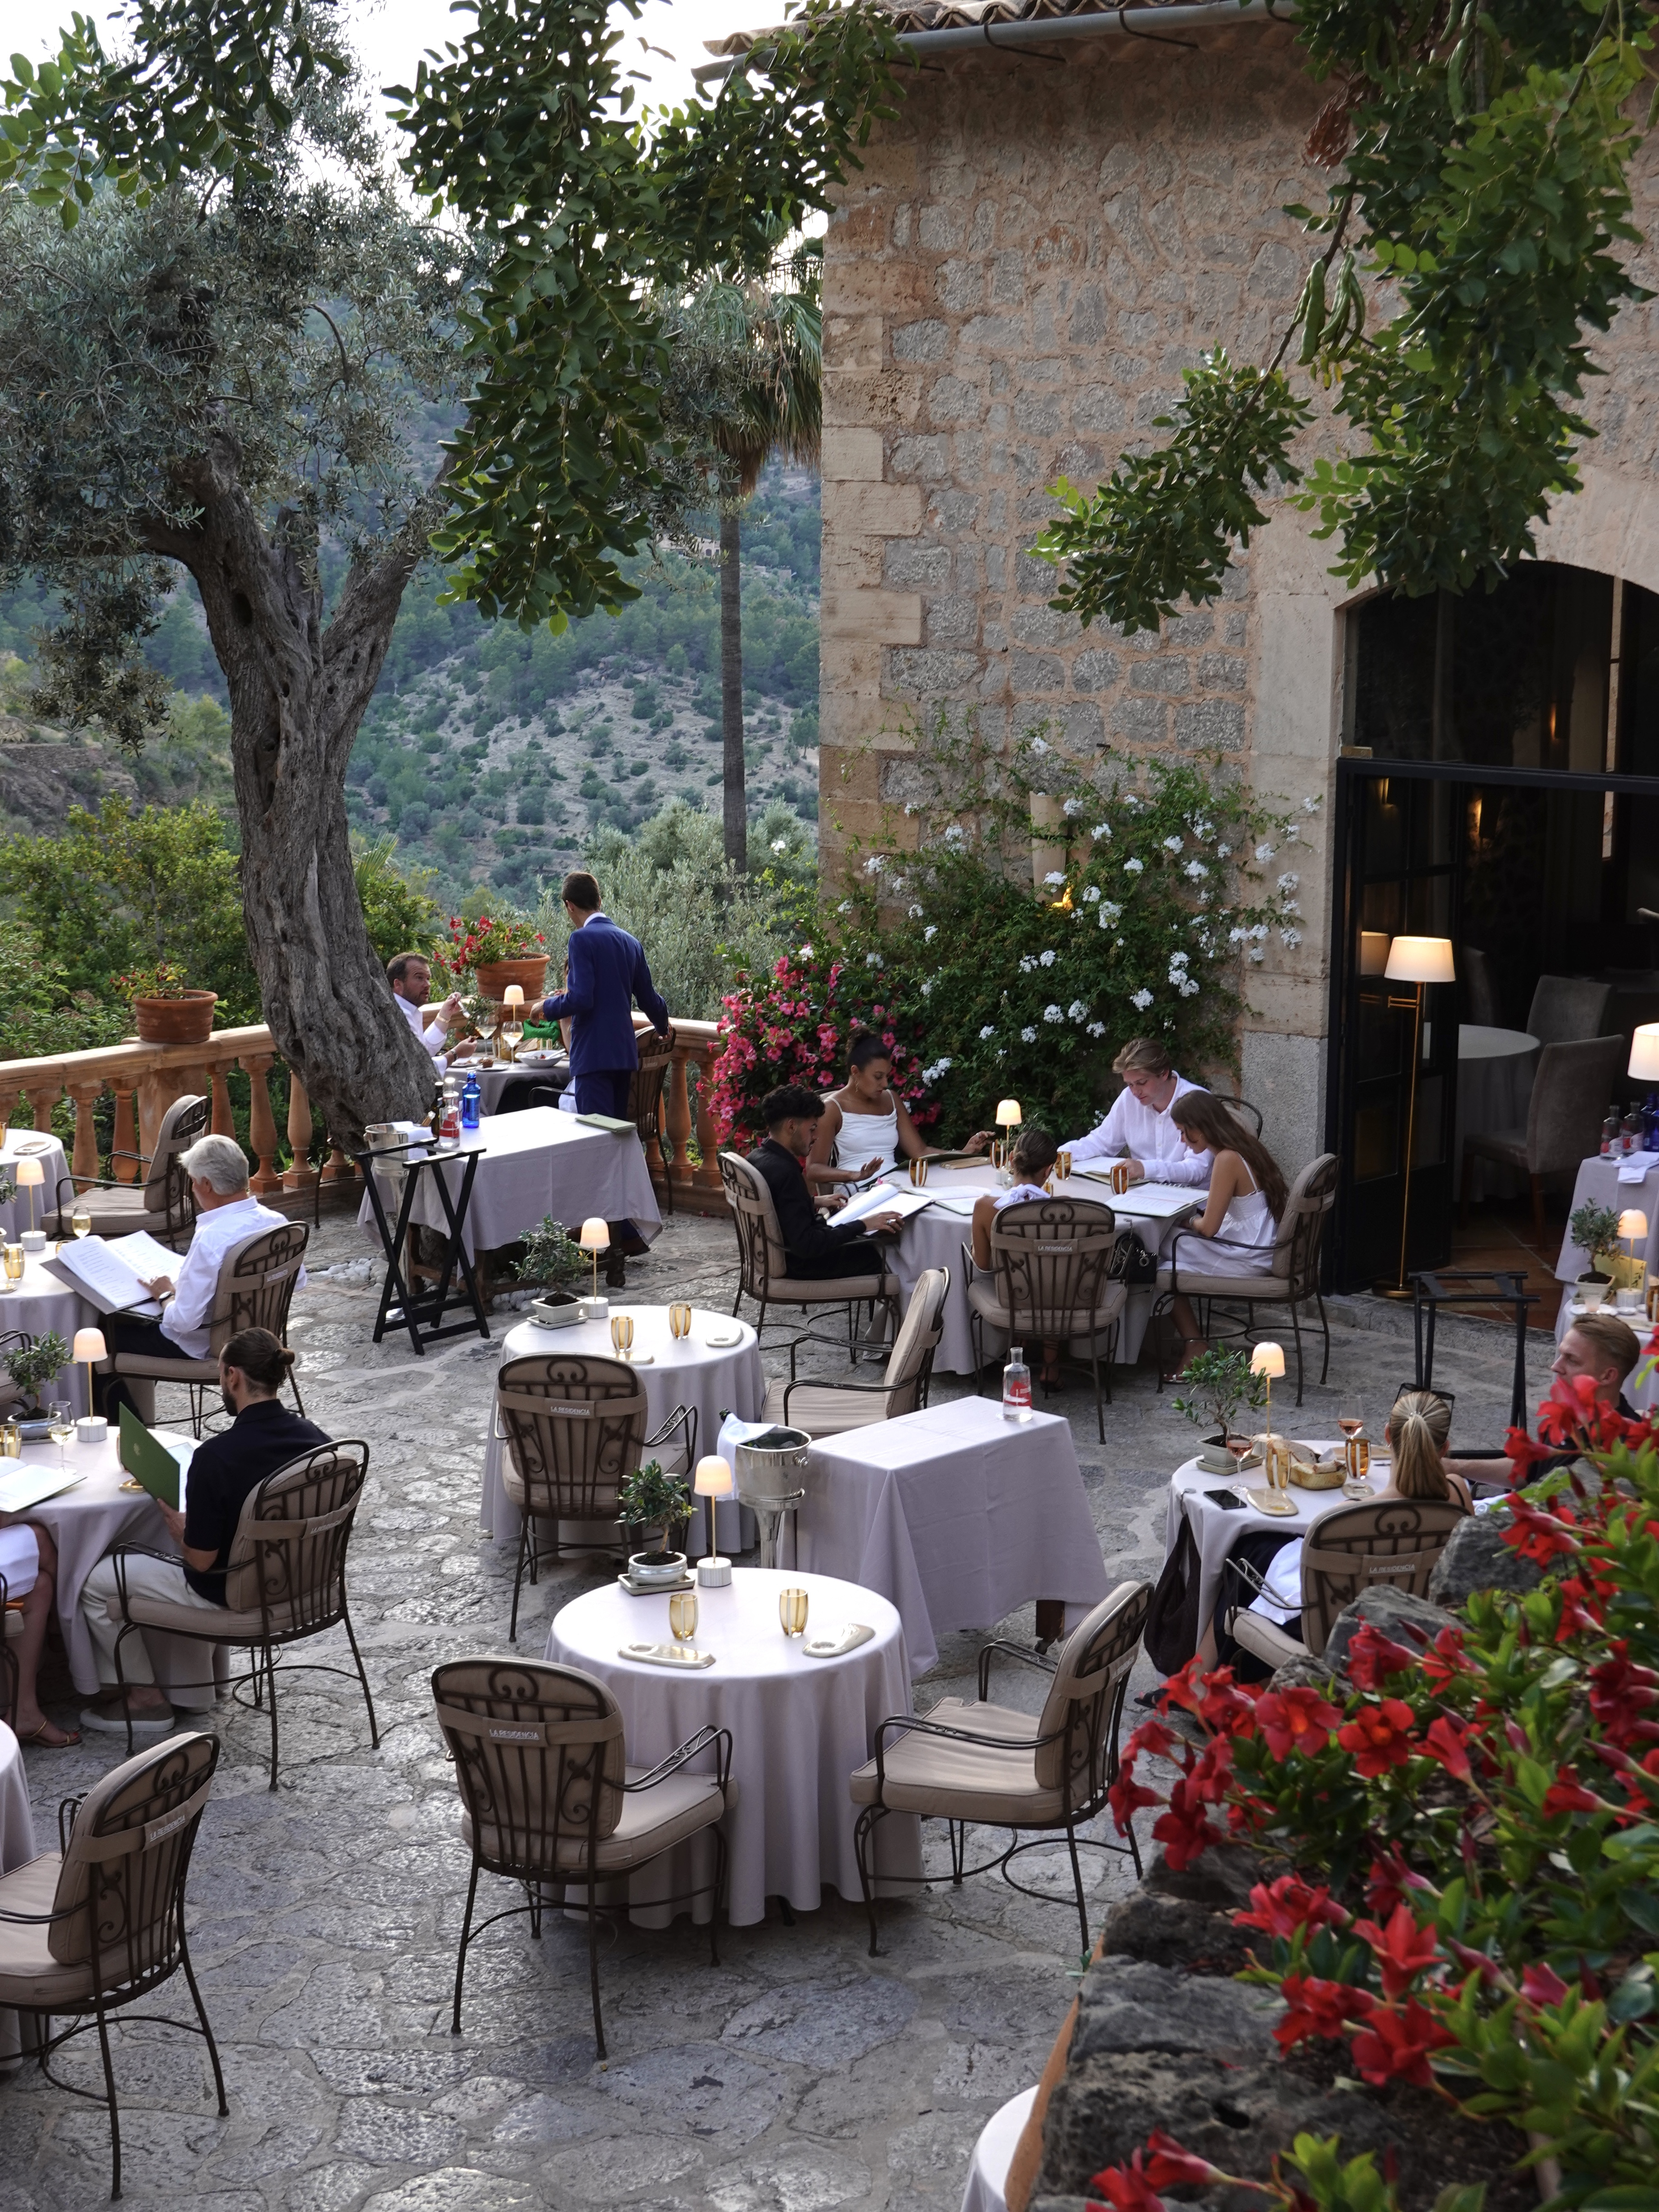 The most beautiful restaurant in Mallorca - El Olivo at Belmond in Deia